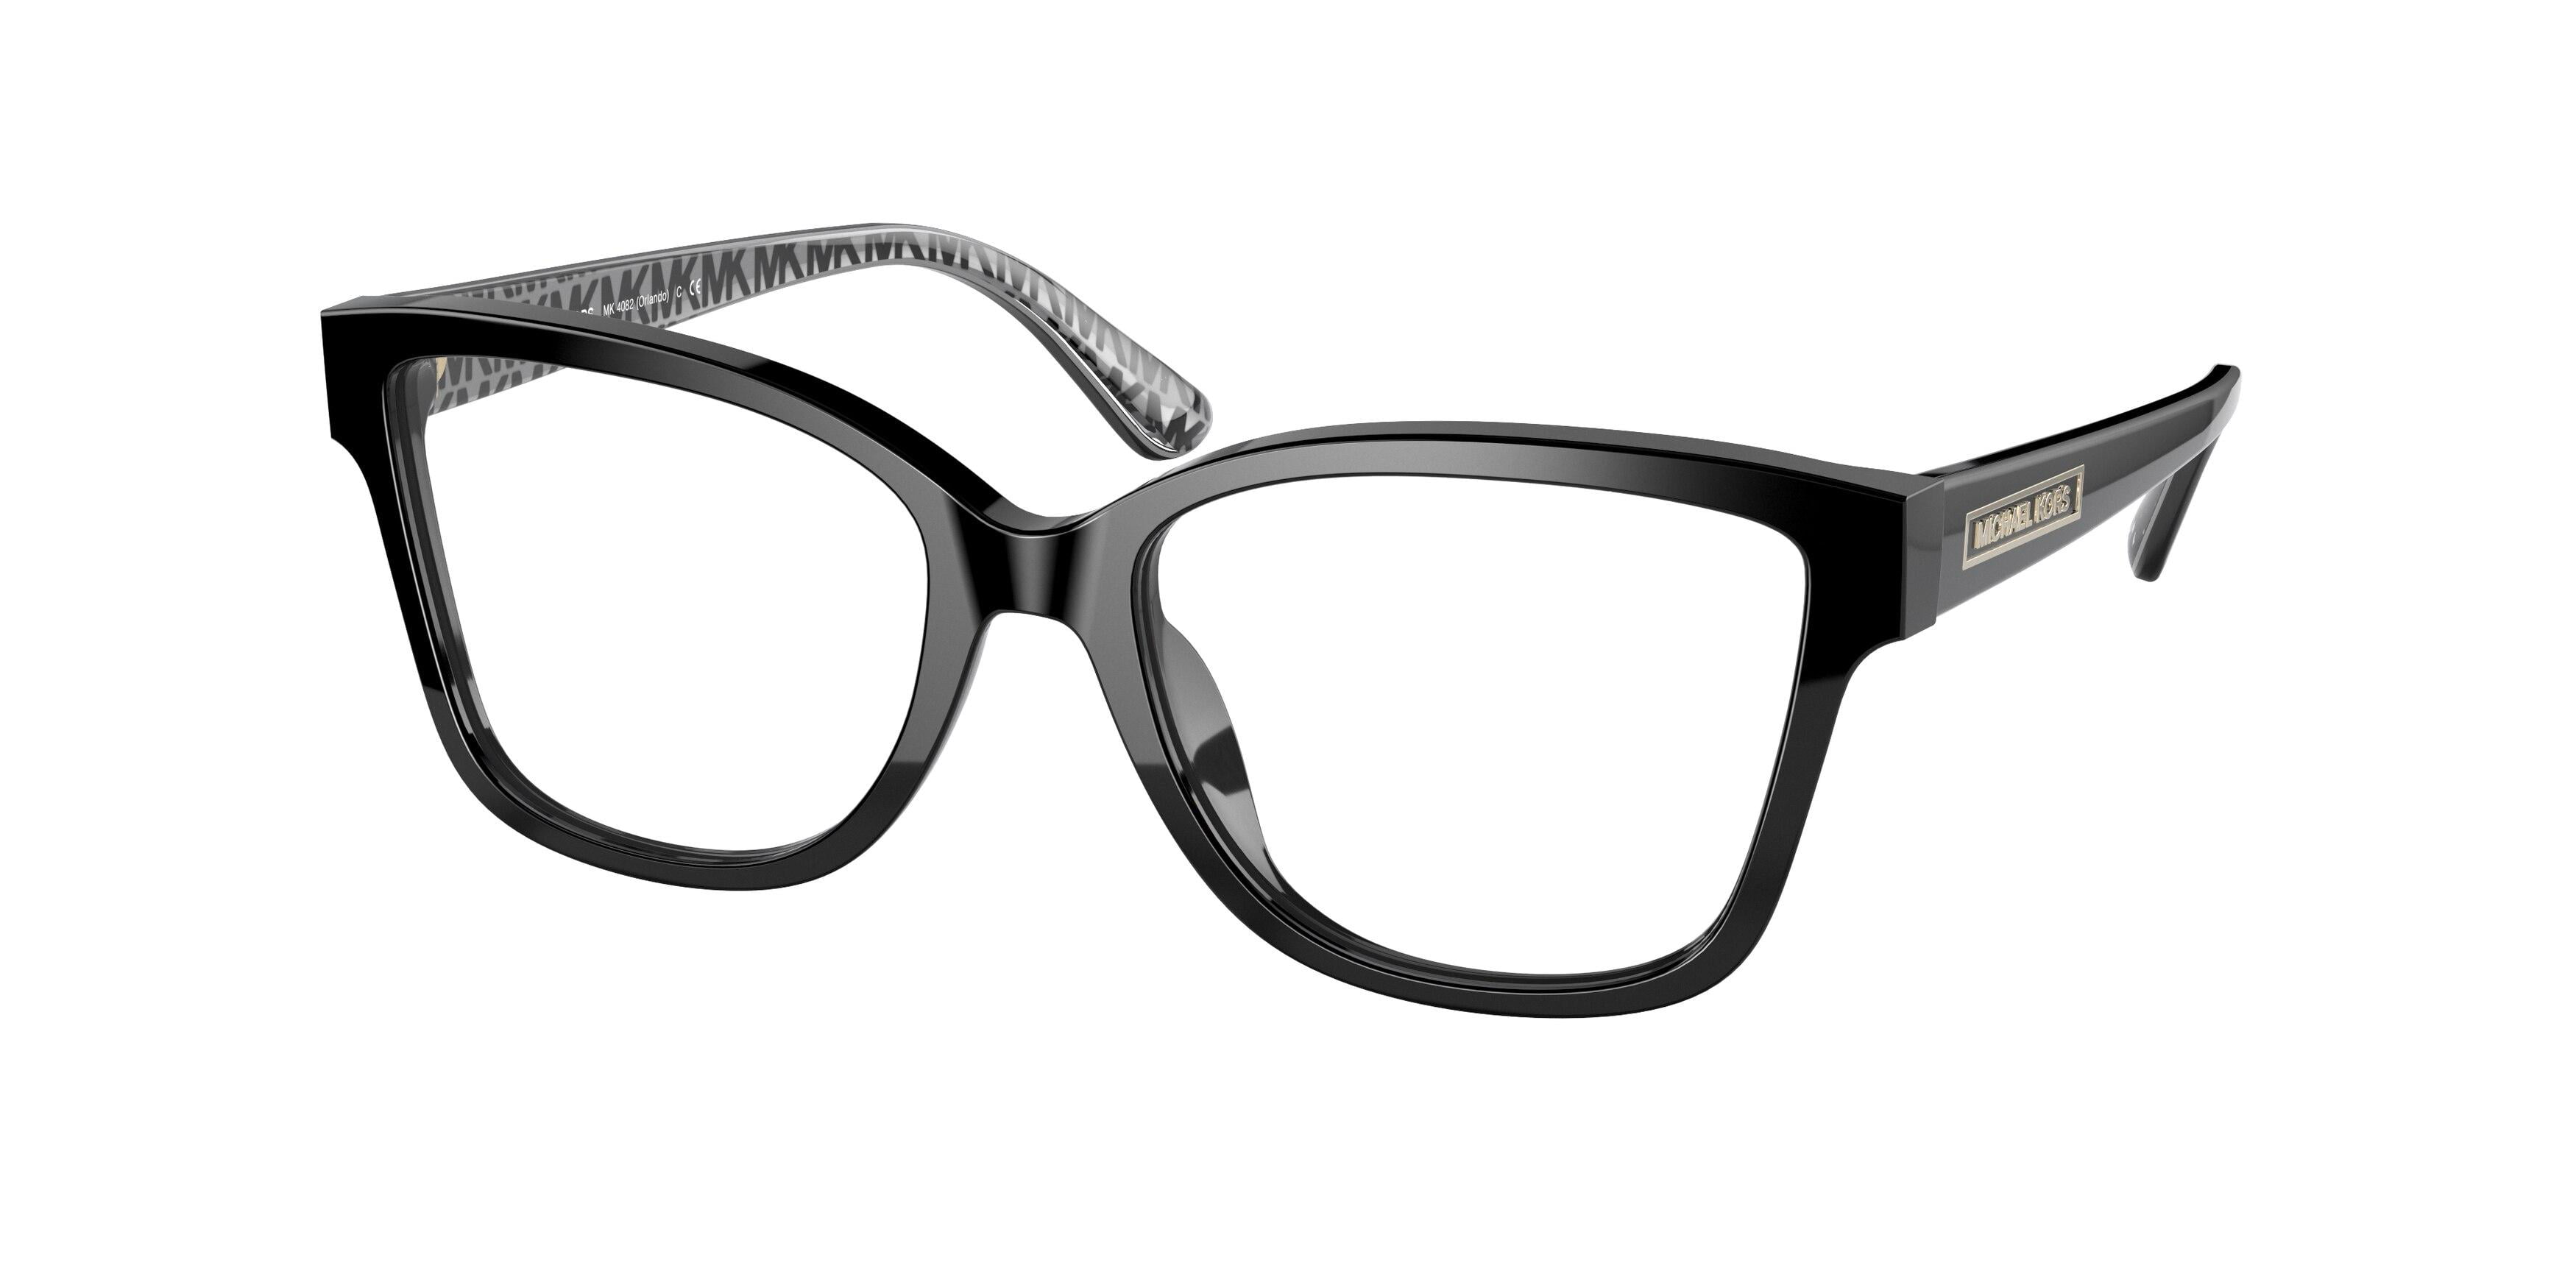 Chi tiết 80+ về michael kors glasses specsavers hay nhất